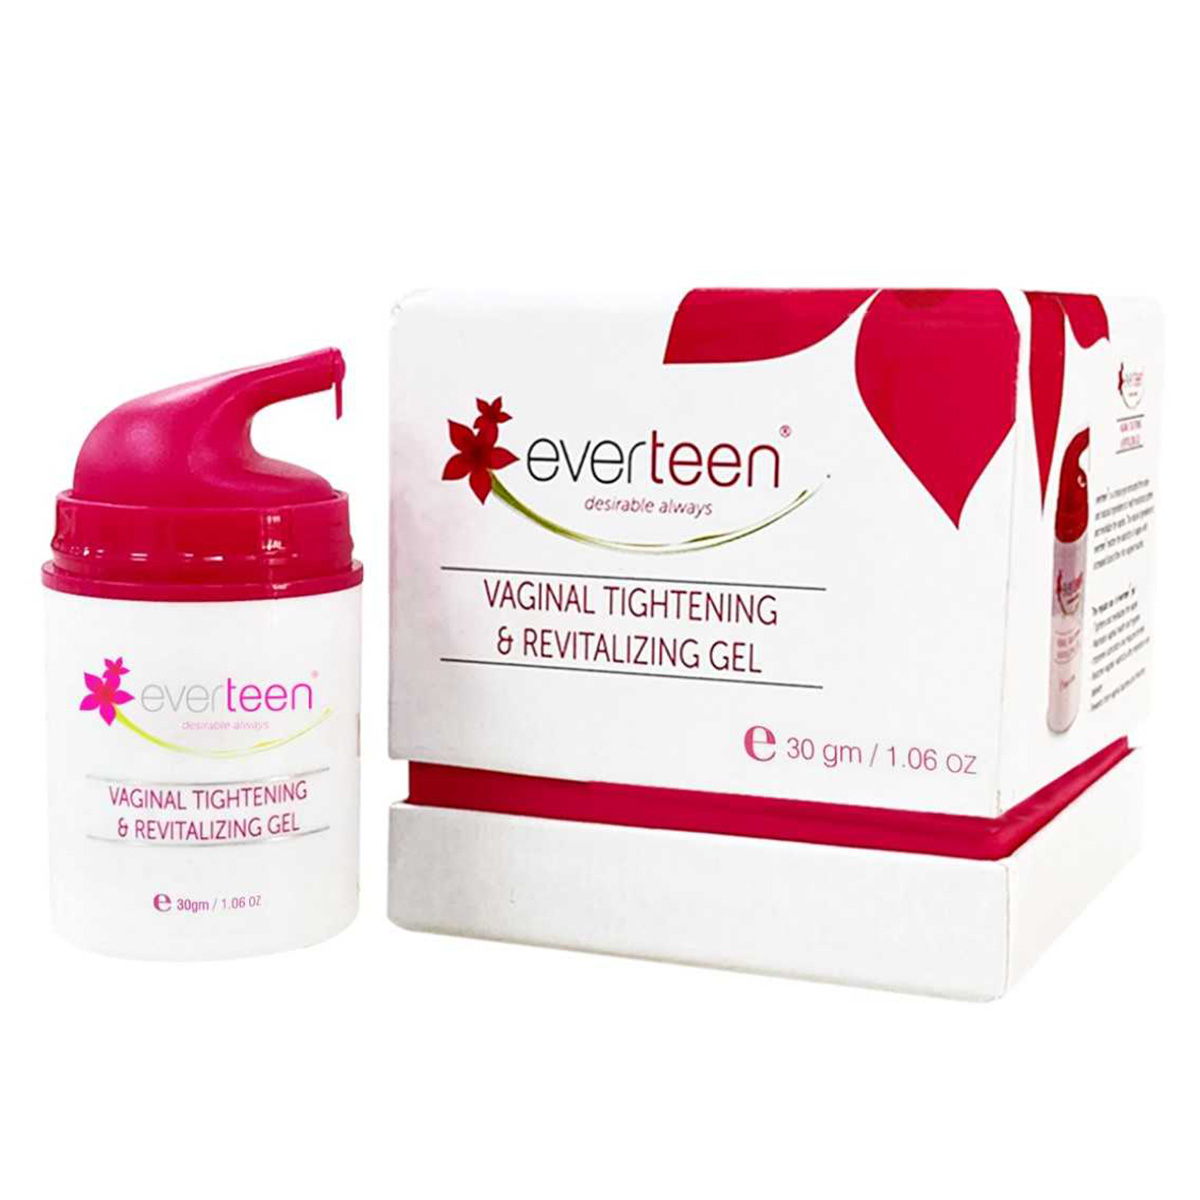 everteen Vaginal Tightening & Revitalizing Gel For Women - Pack of 1, 30gm